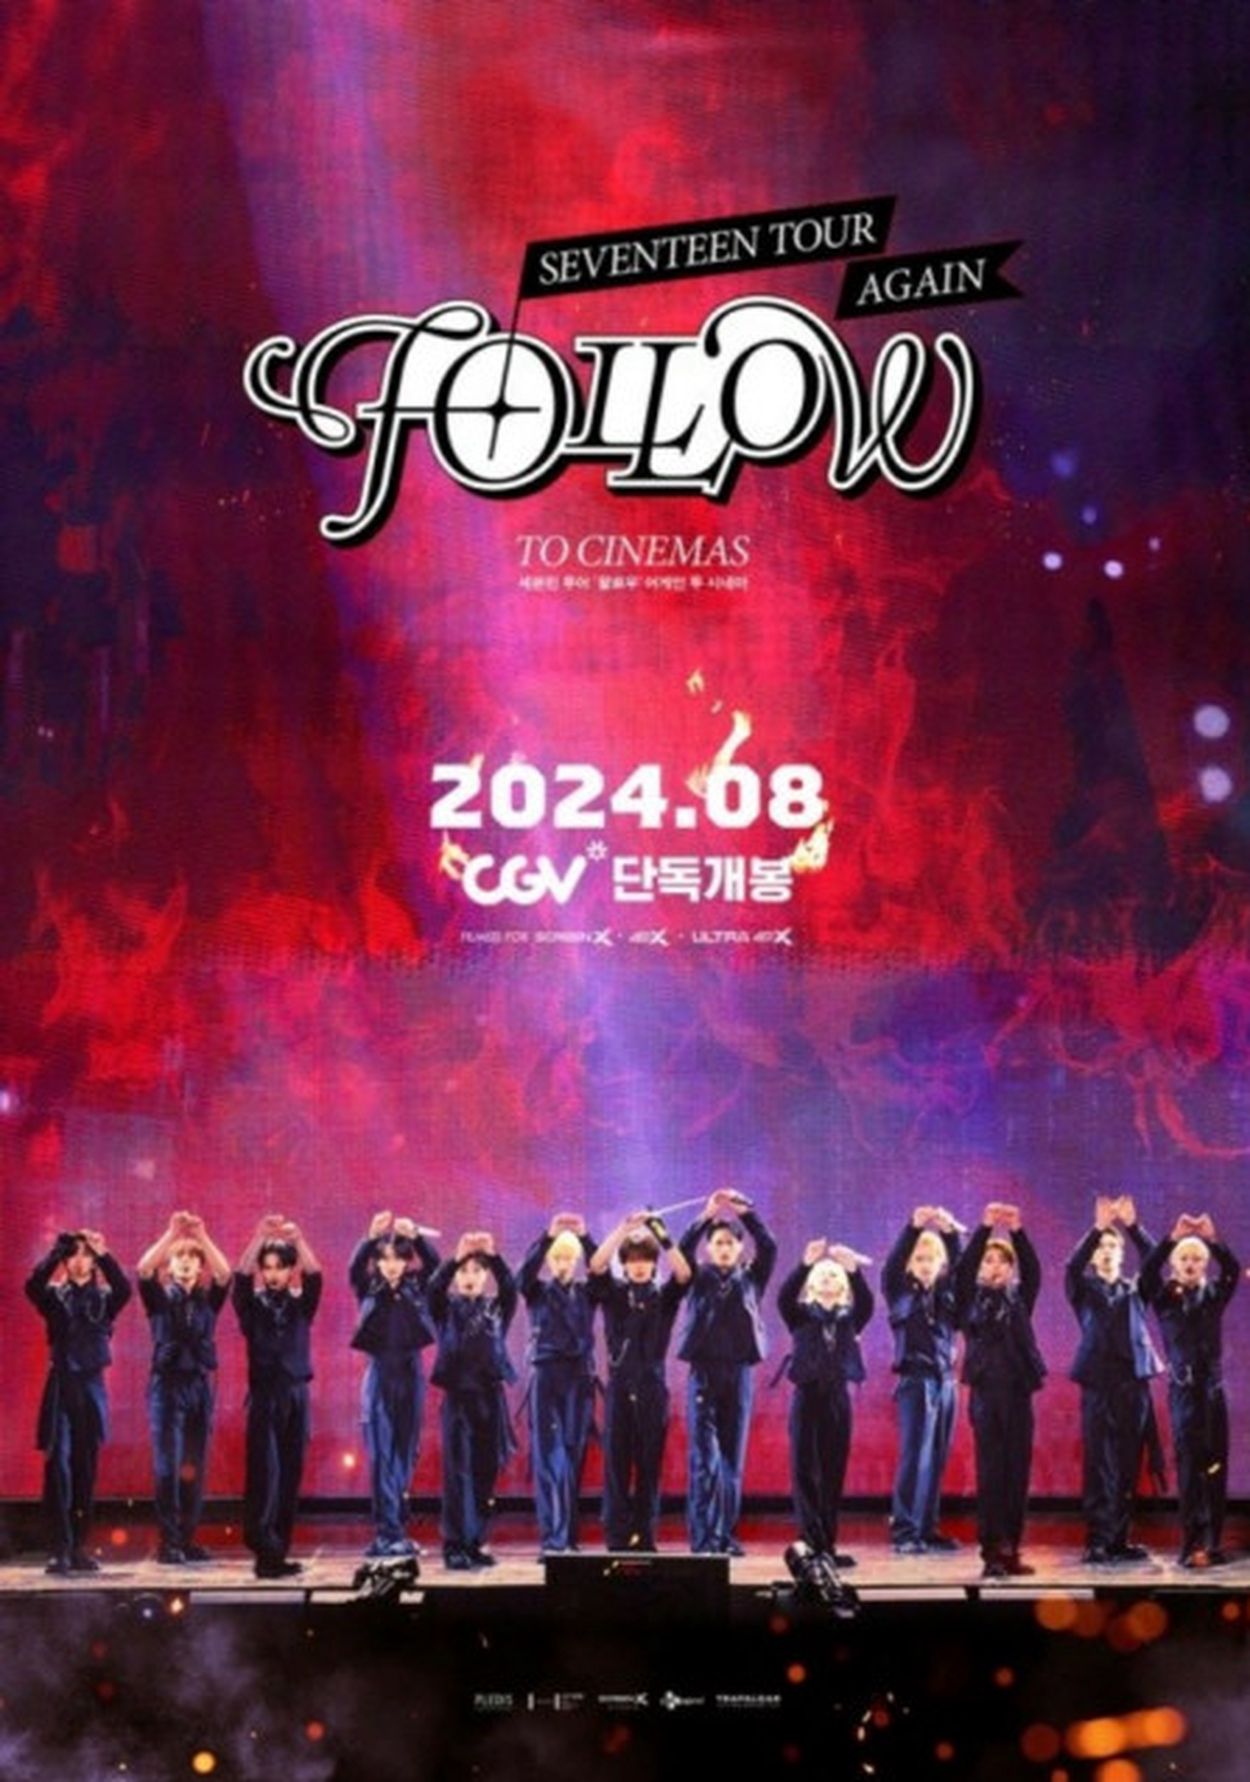 SEVENTEEN」の「SEVENTEEN TOUR 'FOLLOW' AGAIN TO  CINEMAS」、8月14日に劇場公開決定(WoW!Korea) - goo ニュース